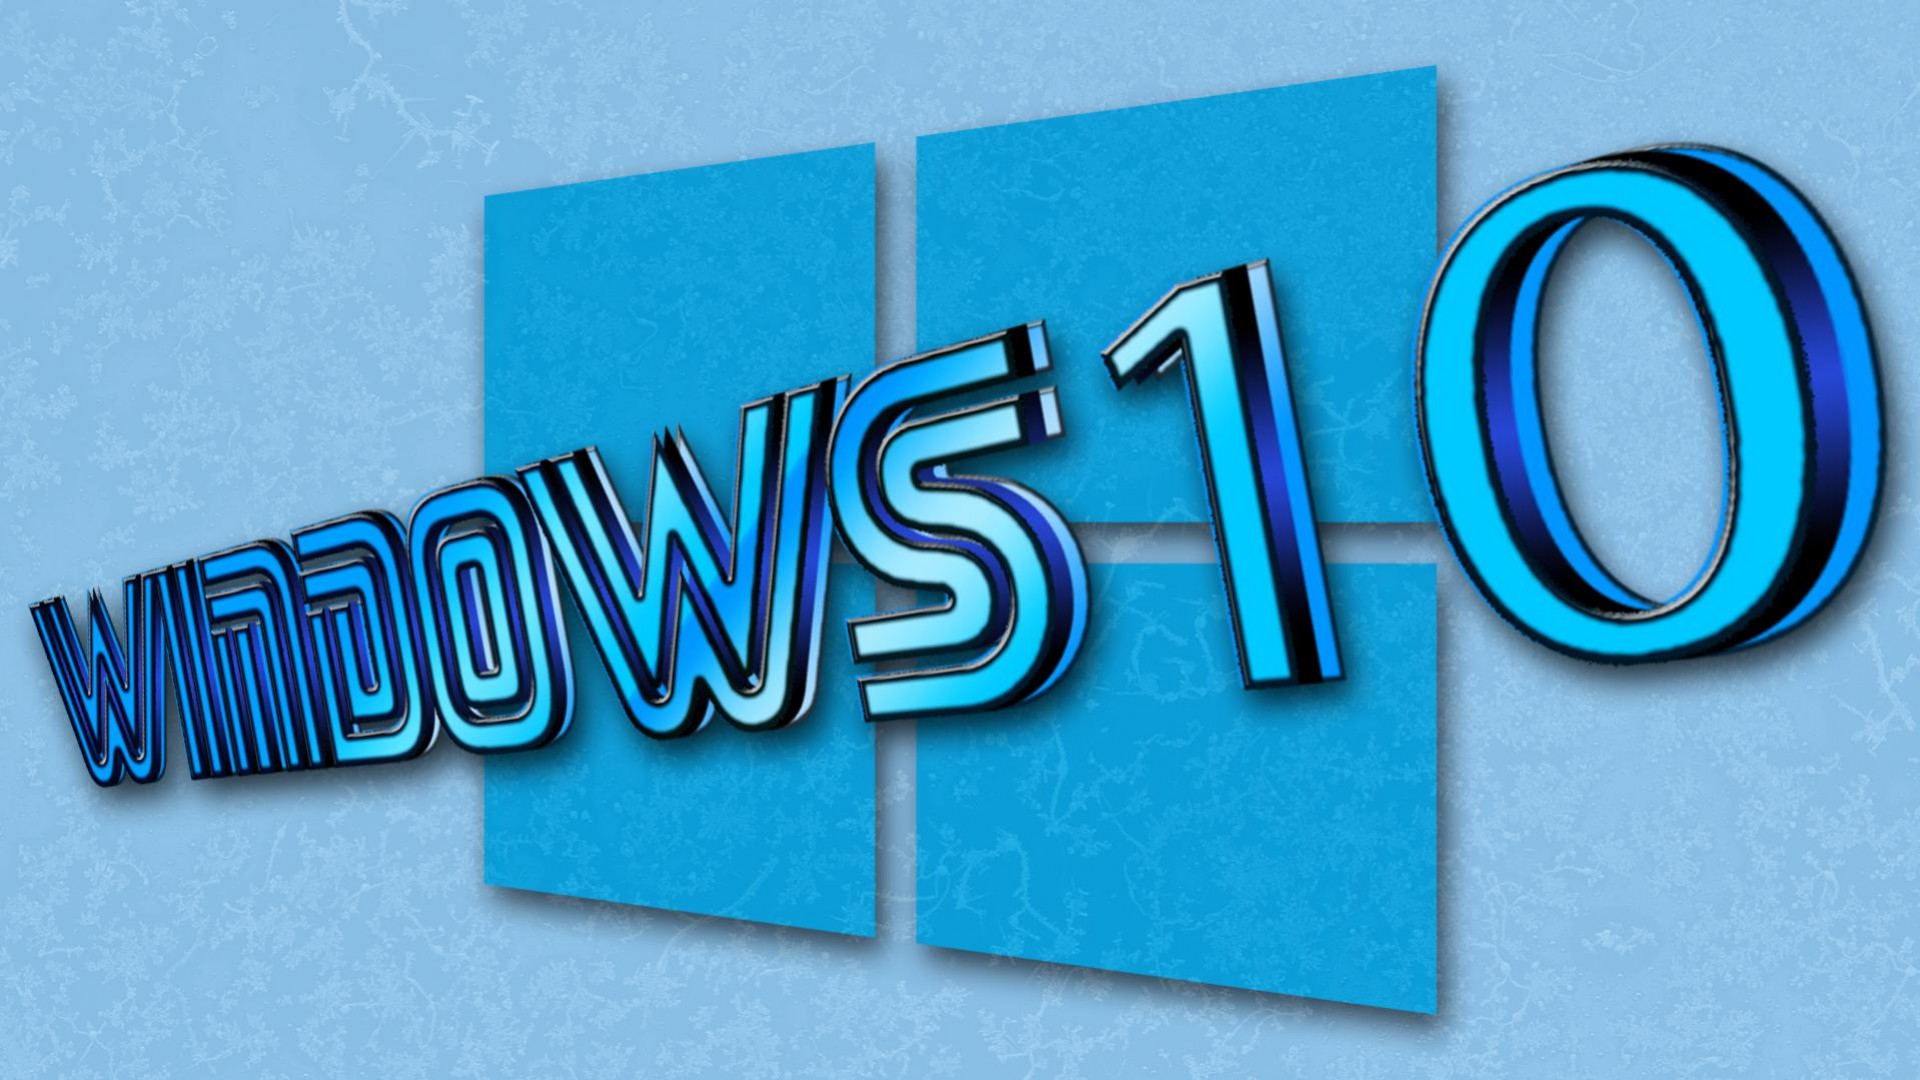 Windows 10 Logo wallpaper 1920x1080 1080p   Wallpaper   Wallpaper 1920x1080